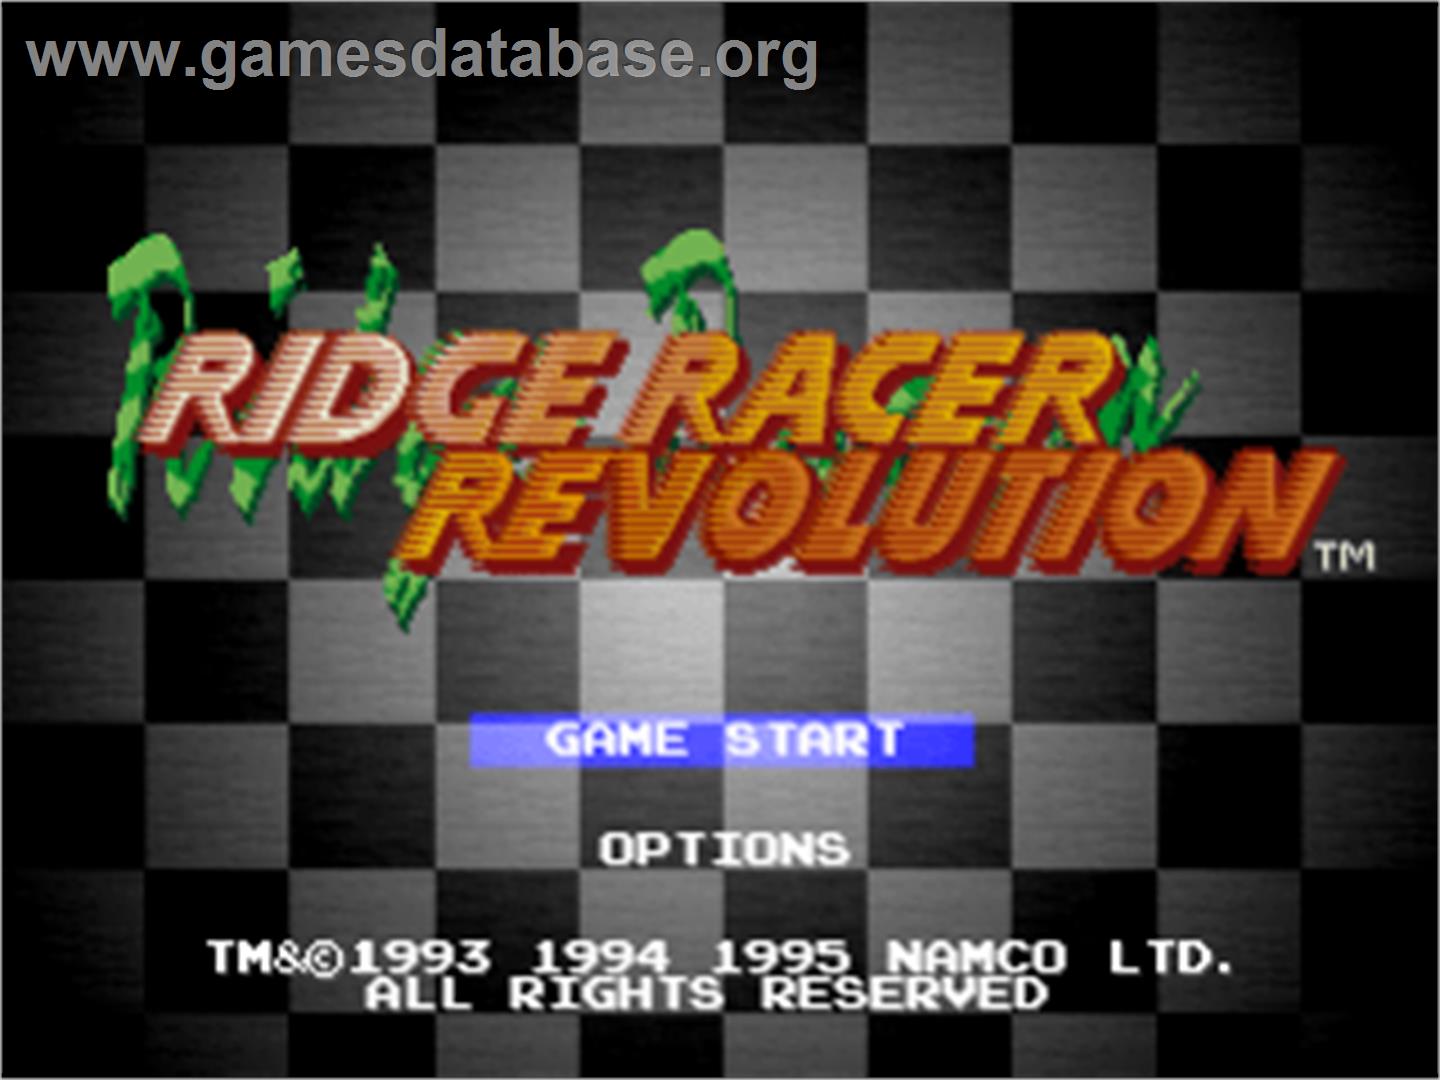 Ridge Racer Revolution - Sony Playstation - Artwork - Title Screen